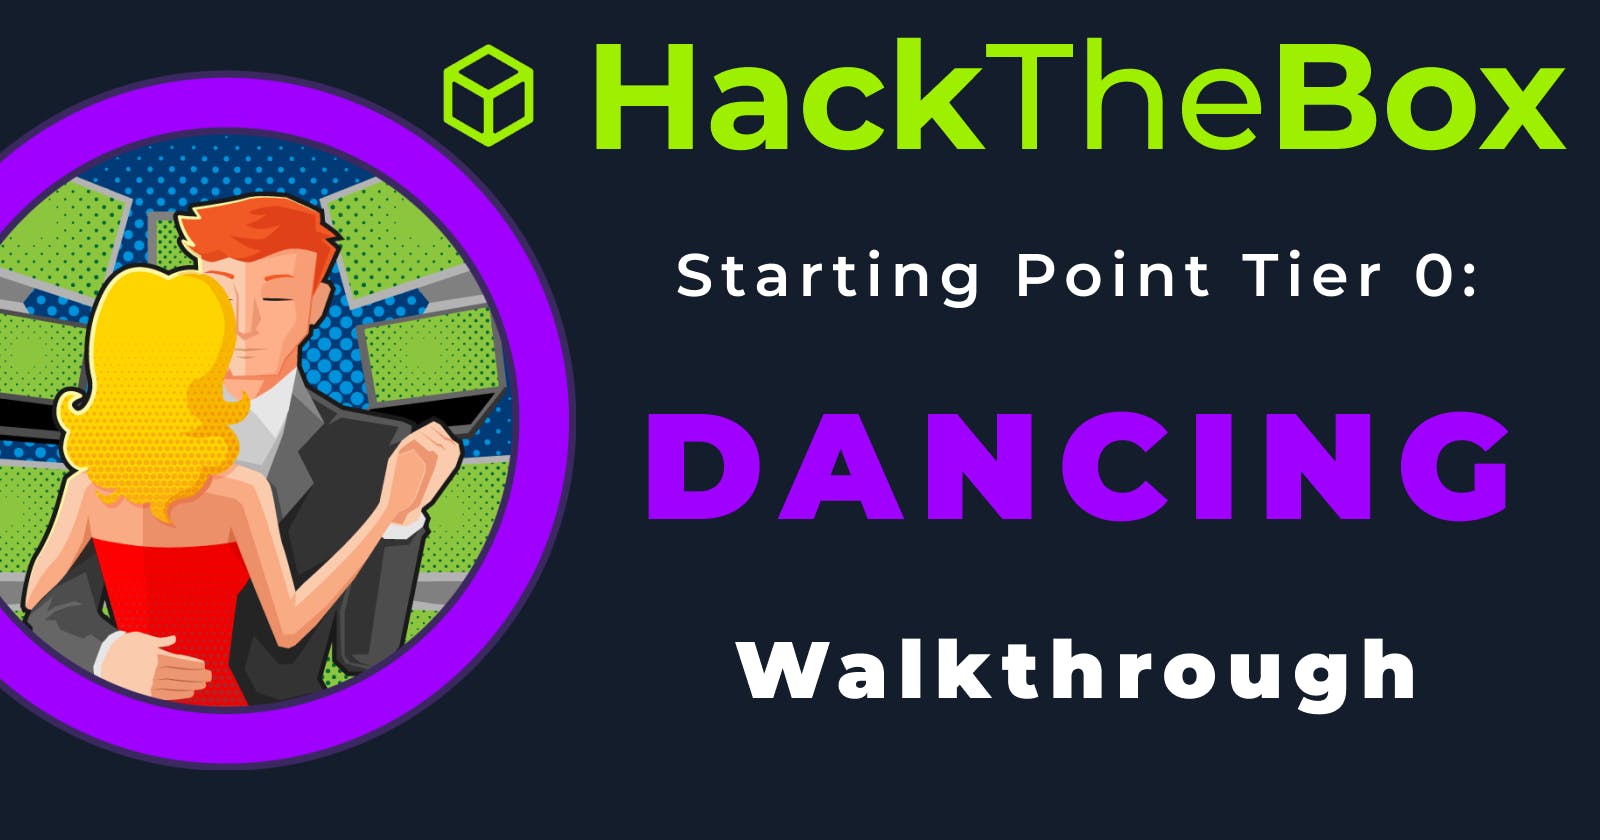 HackTheBox Starting Point Tier 0 machine: Dancing Walkthrough